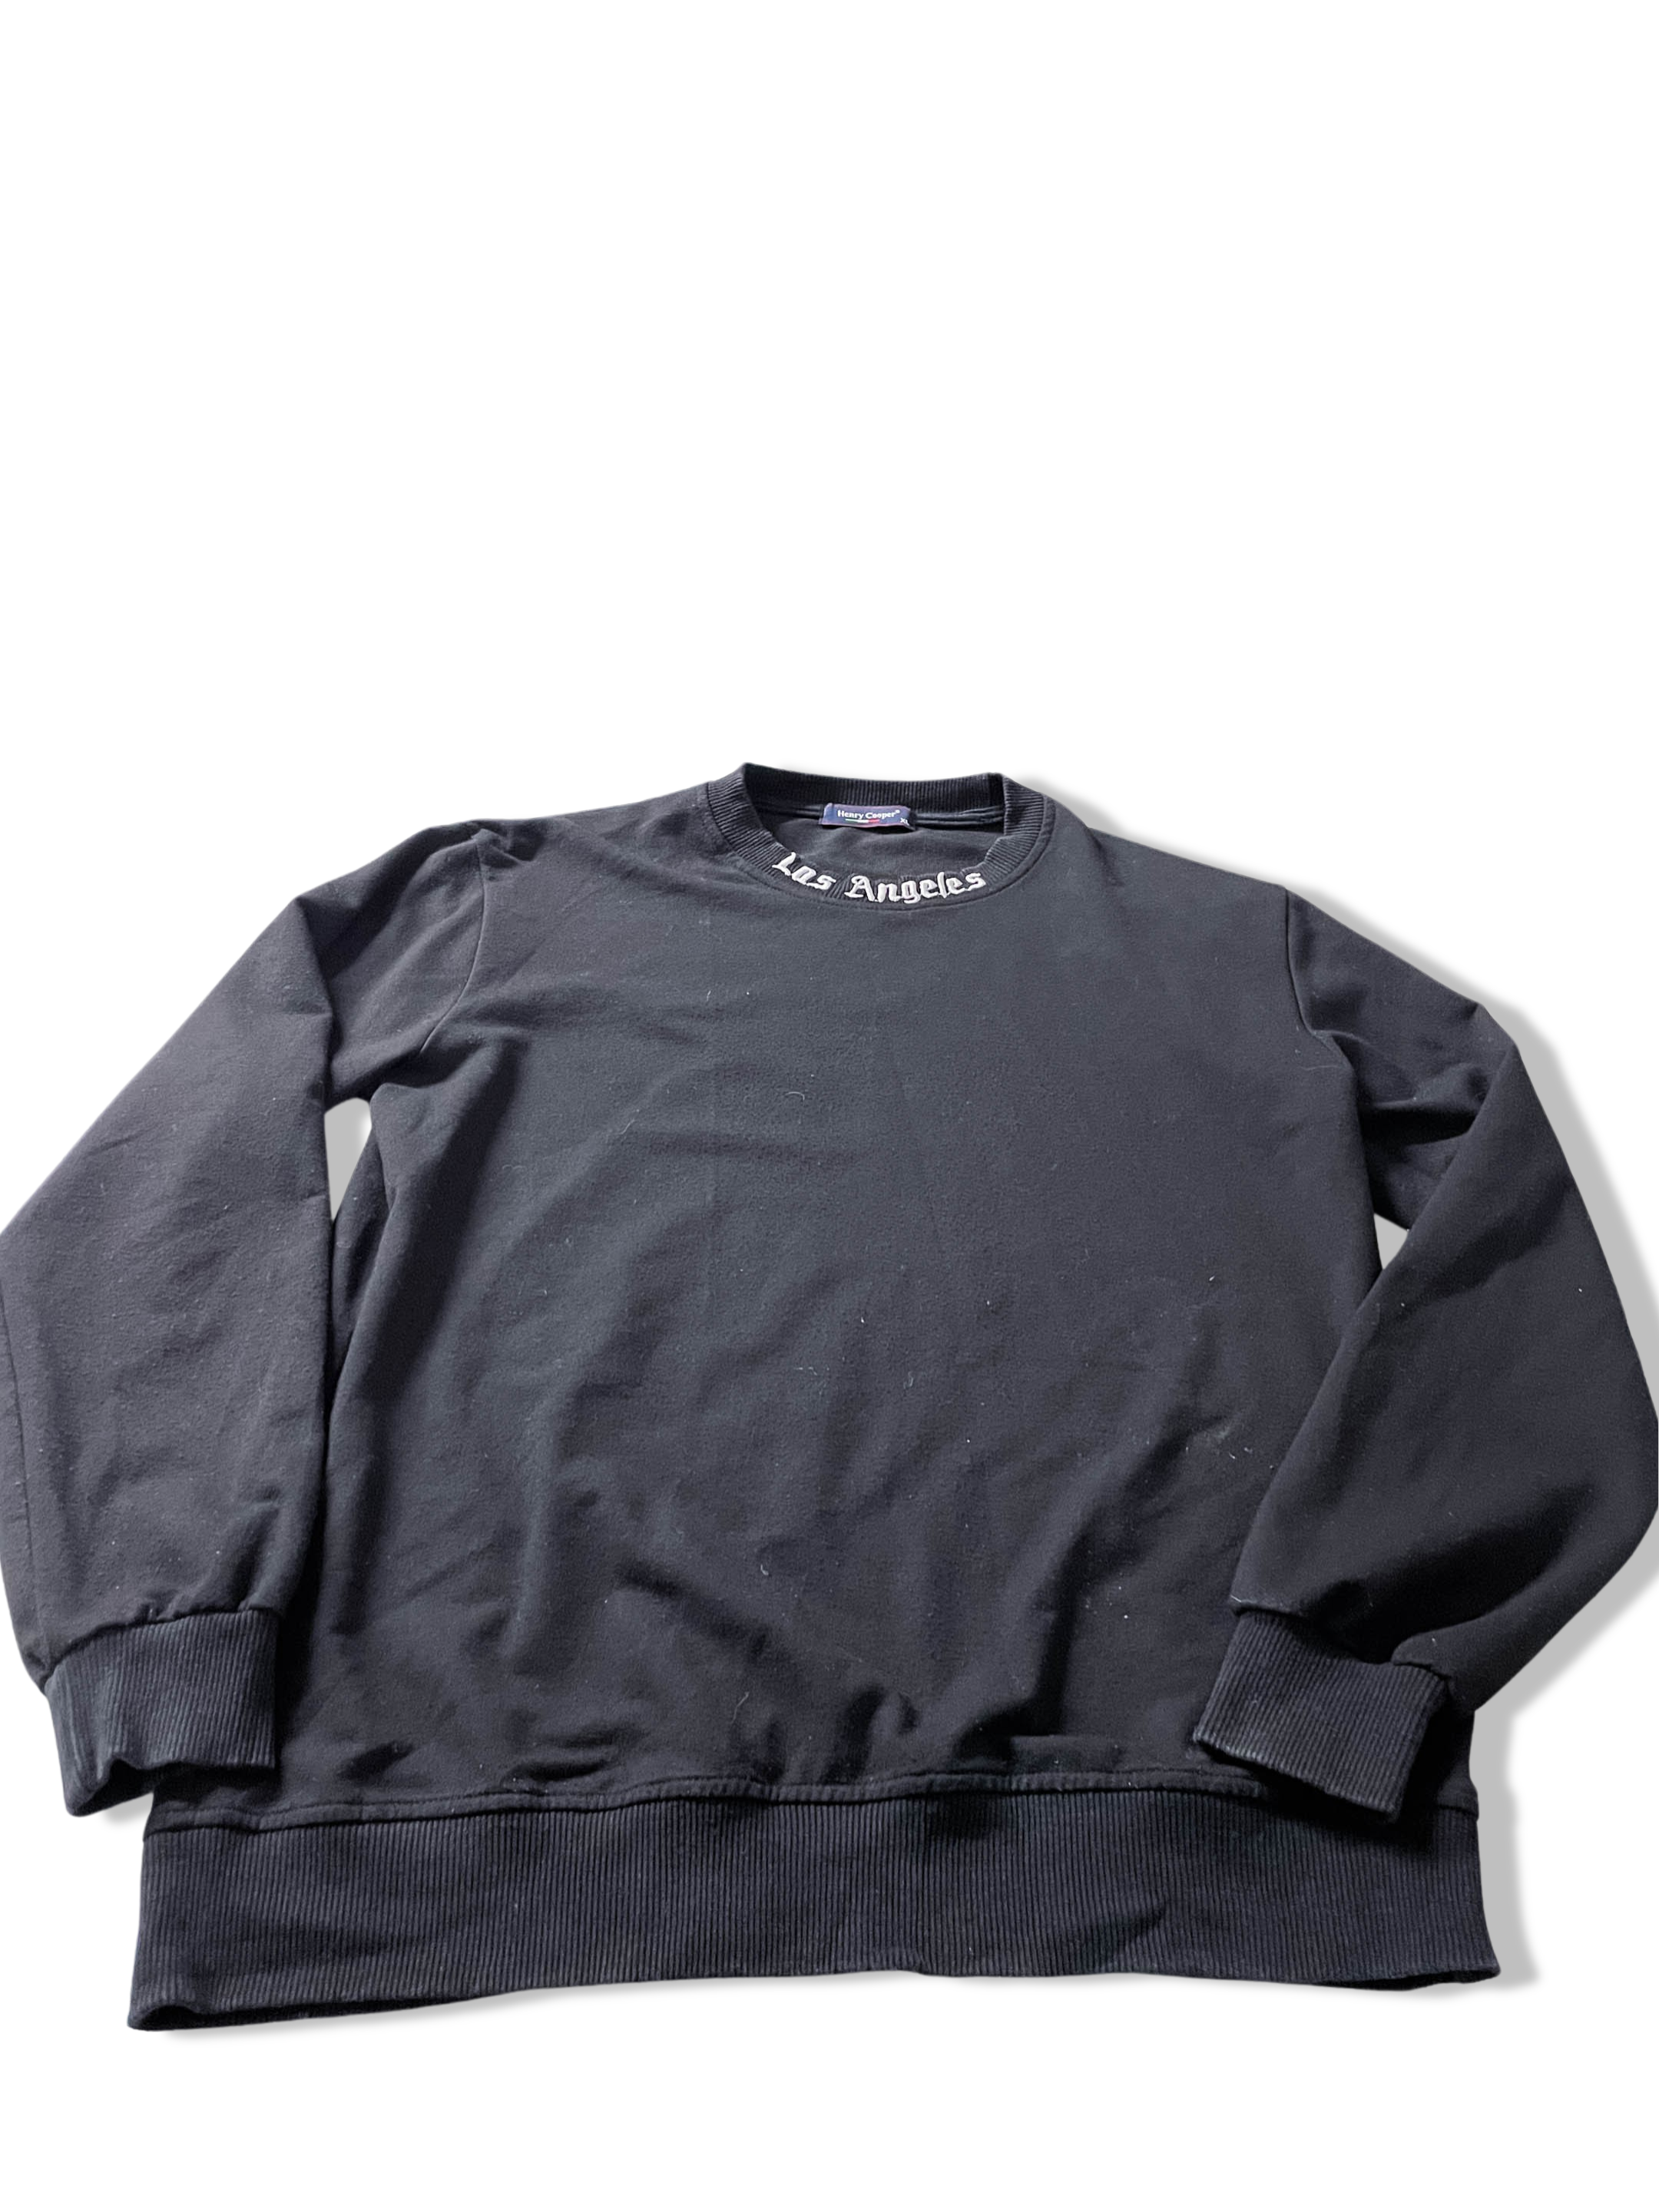 Vintage Henry Cooper Los Angeles print crew neck black XL sweatshirt